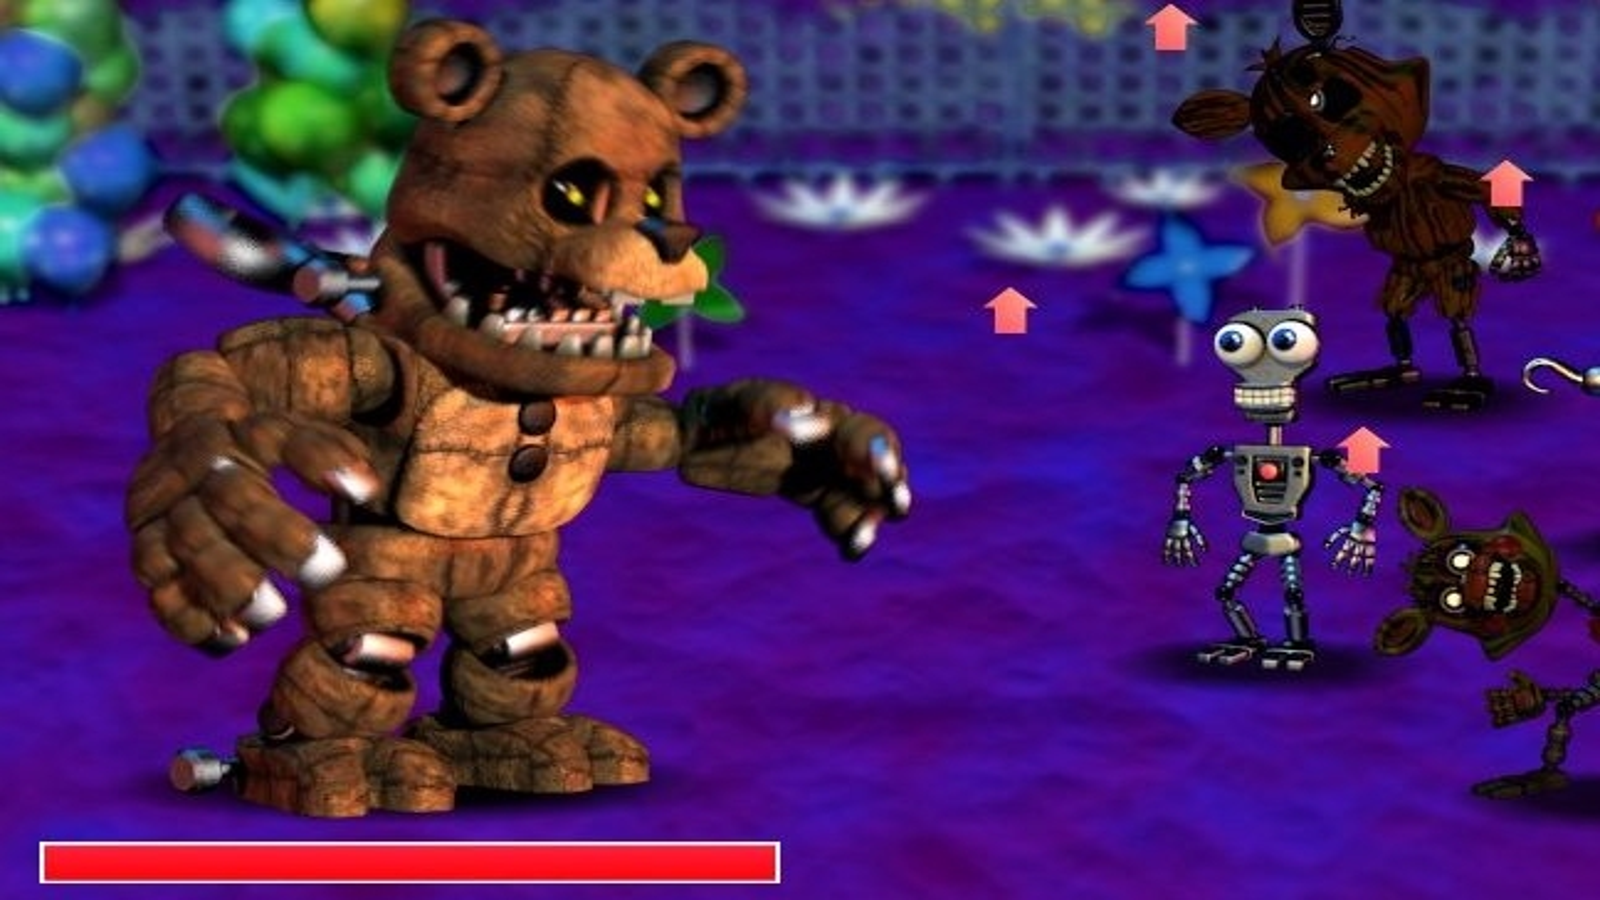 Five Nights at Freddy's World removido do Steam